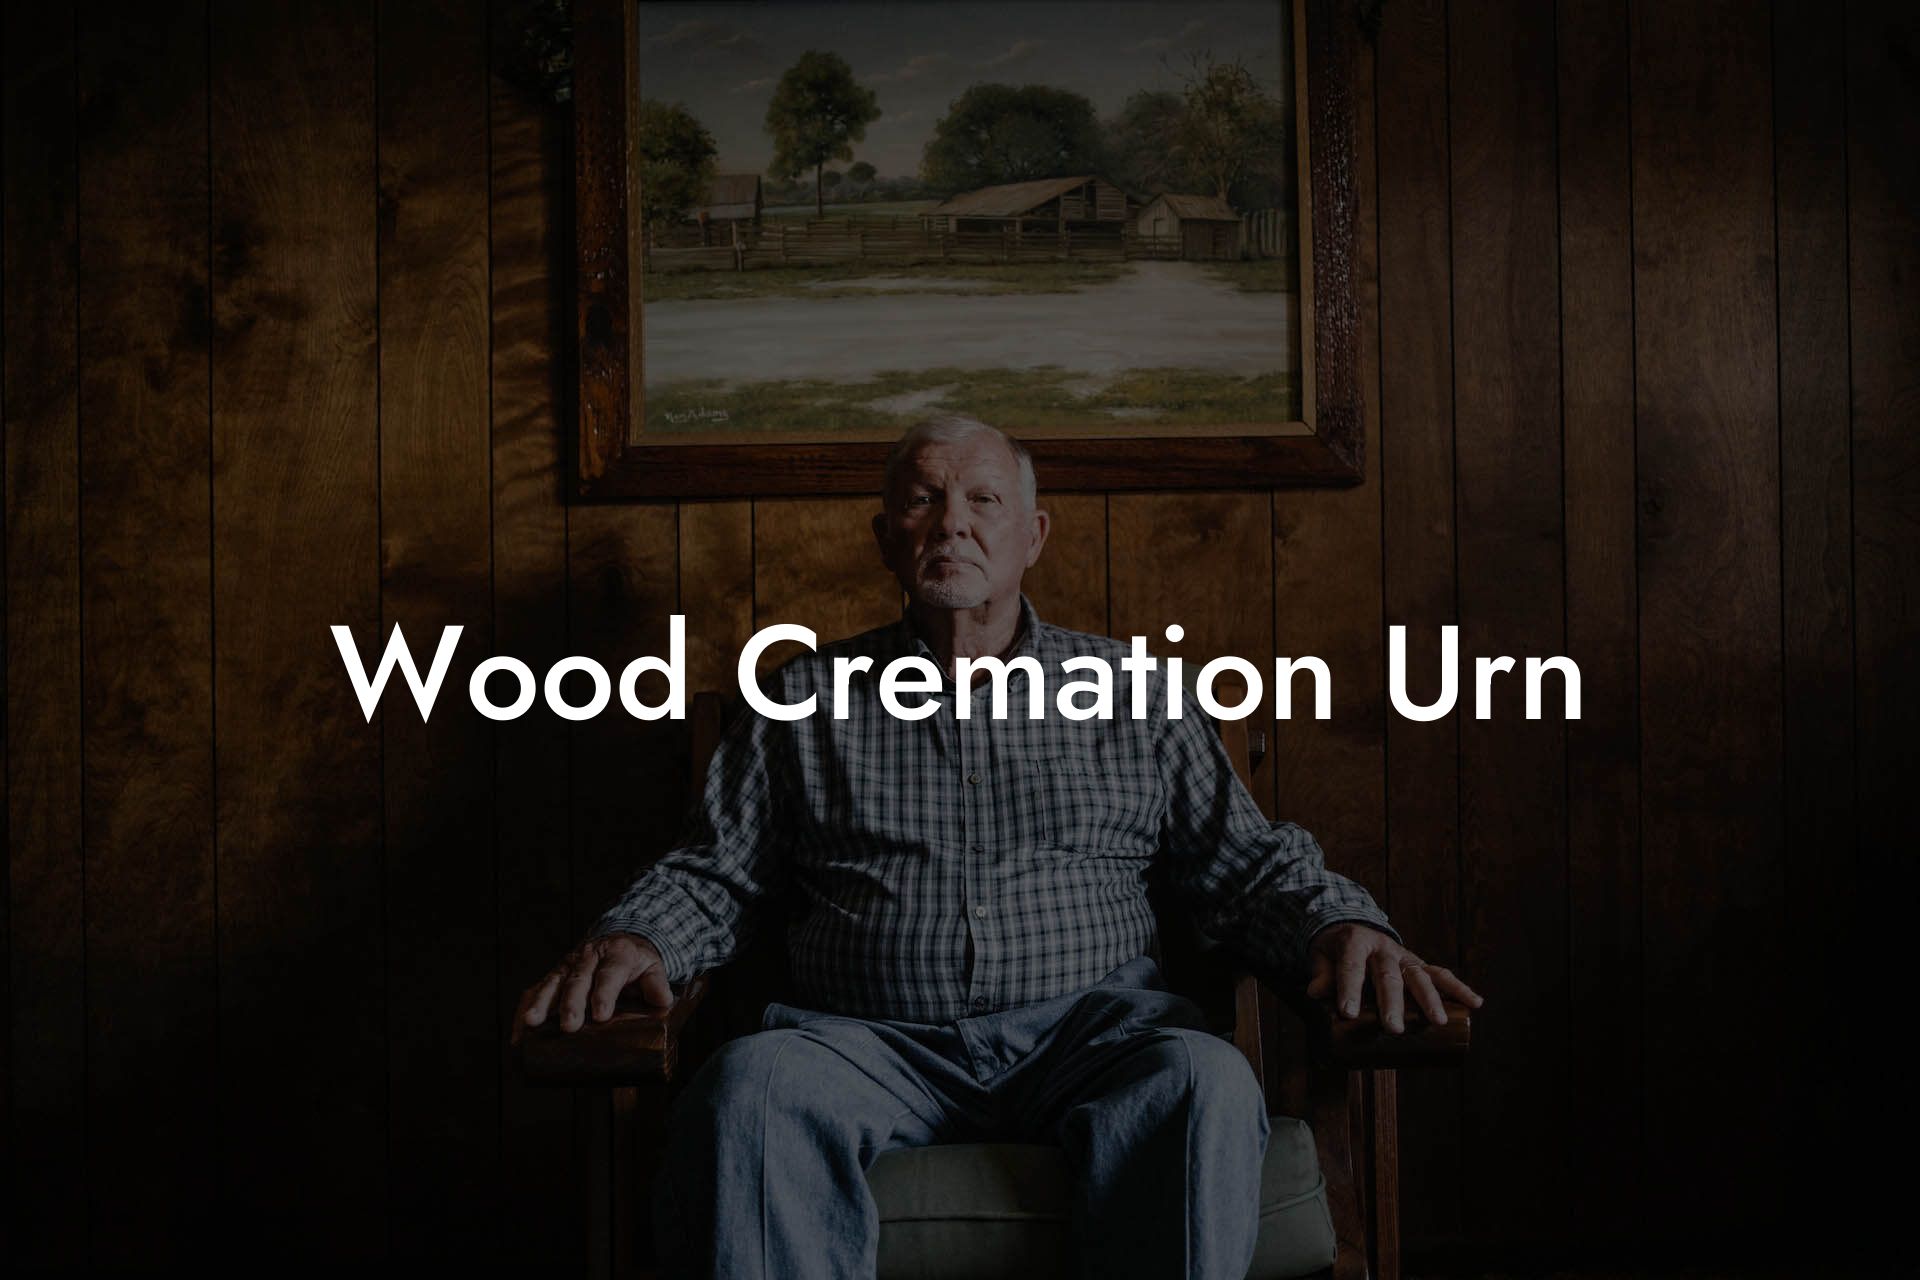 Wood Cremation Urn